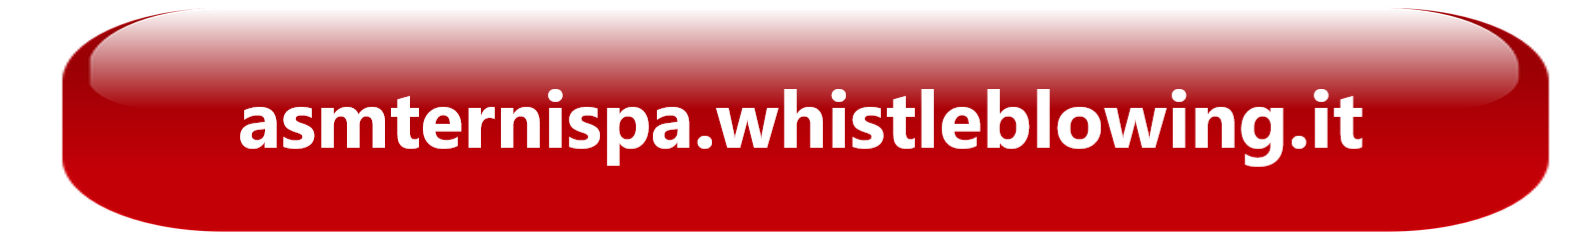 whistleblowing_large